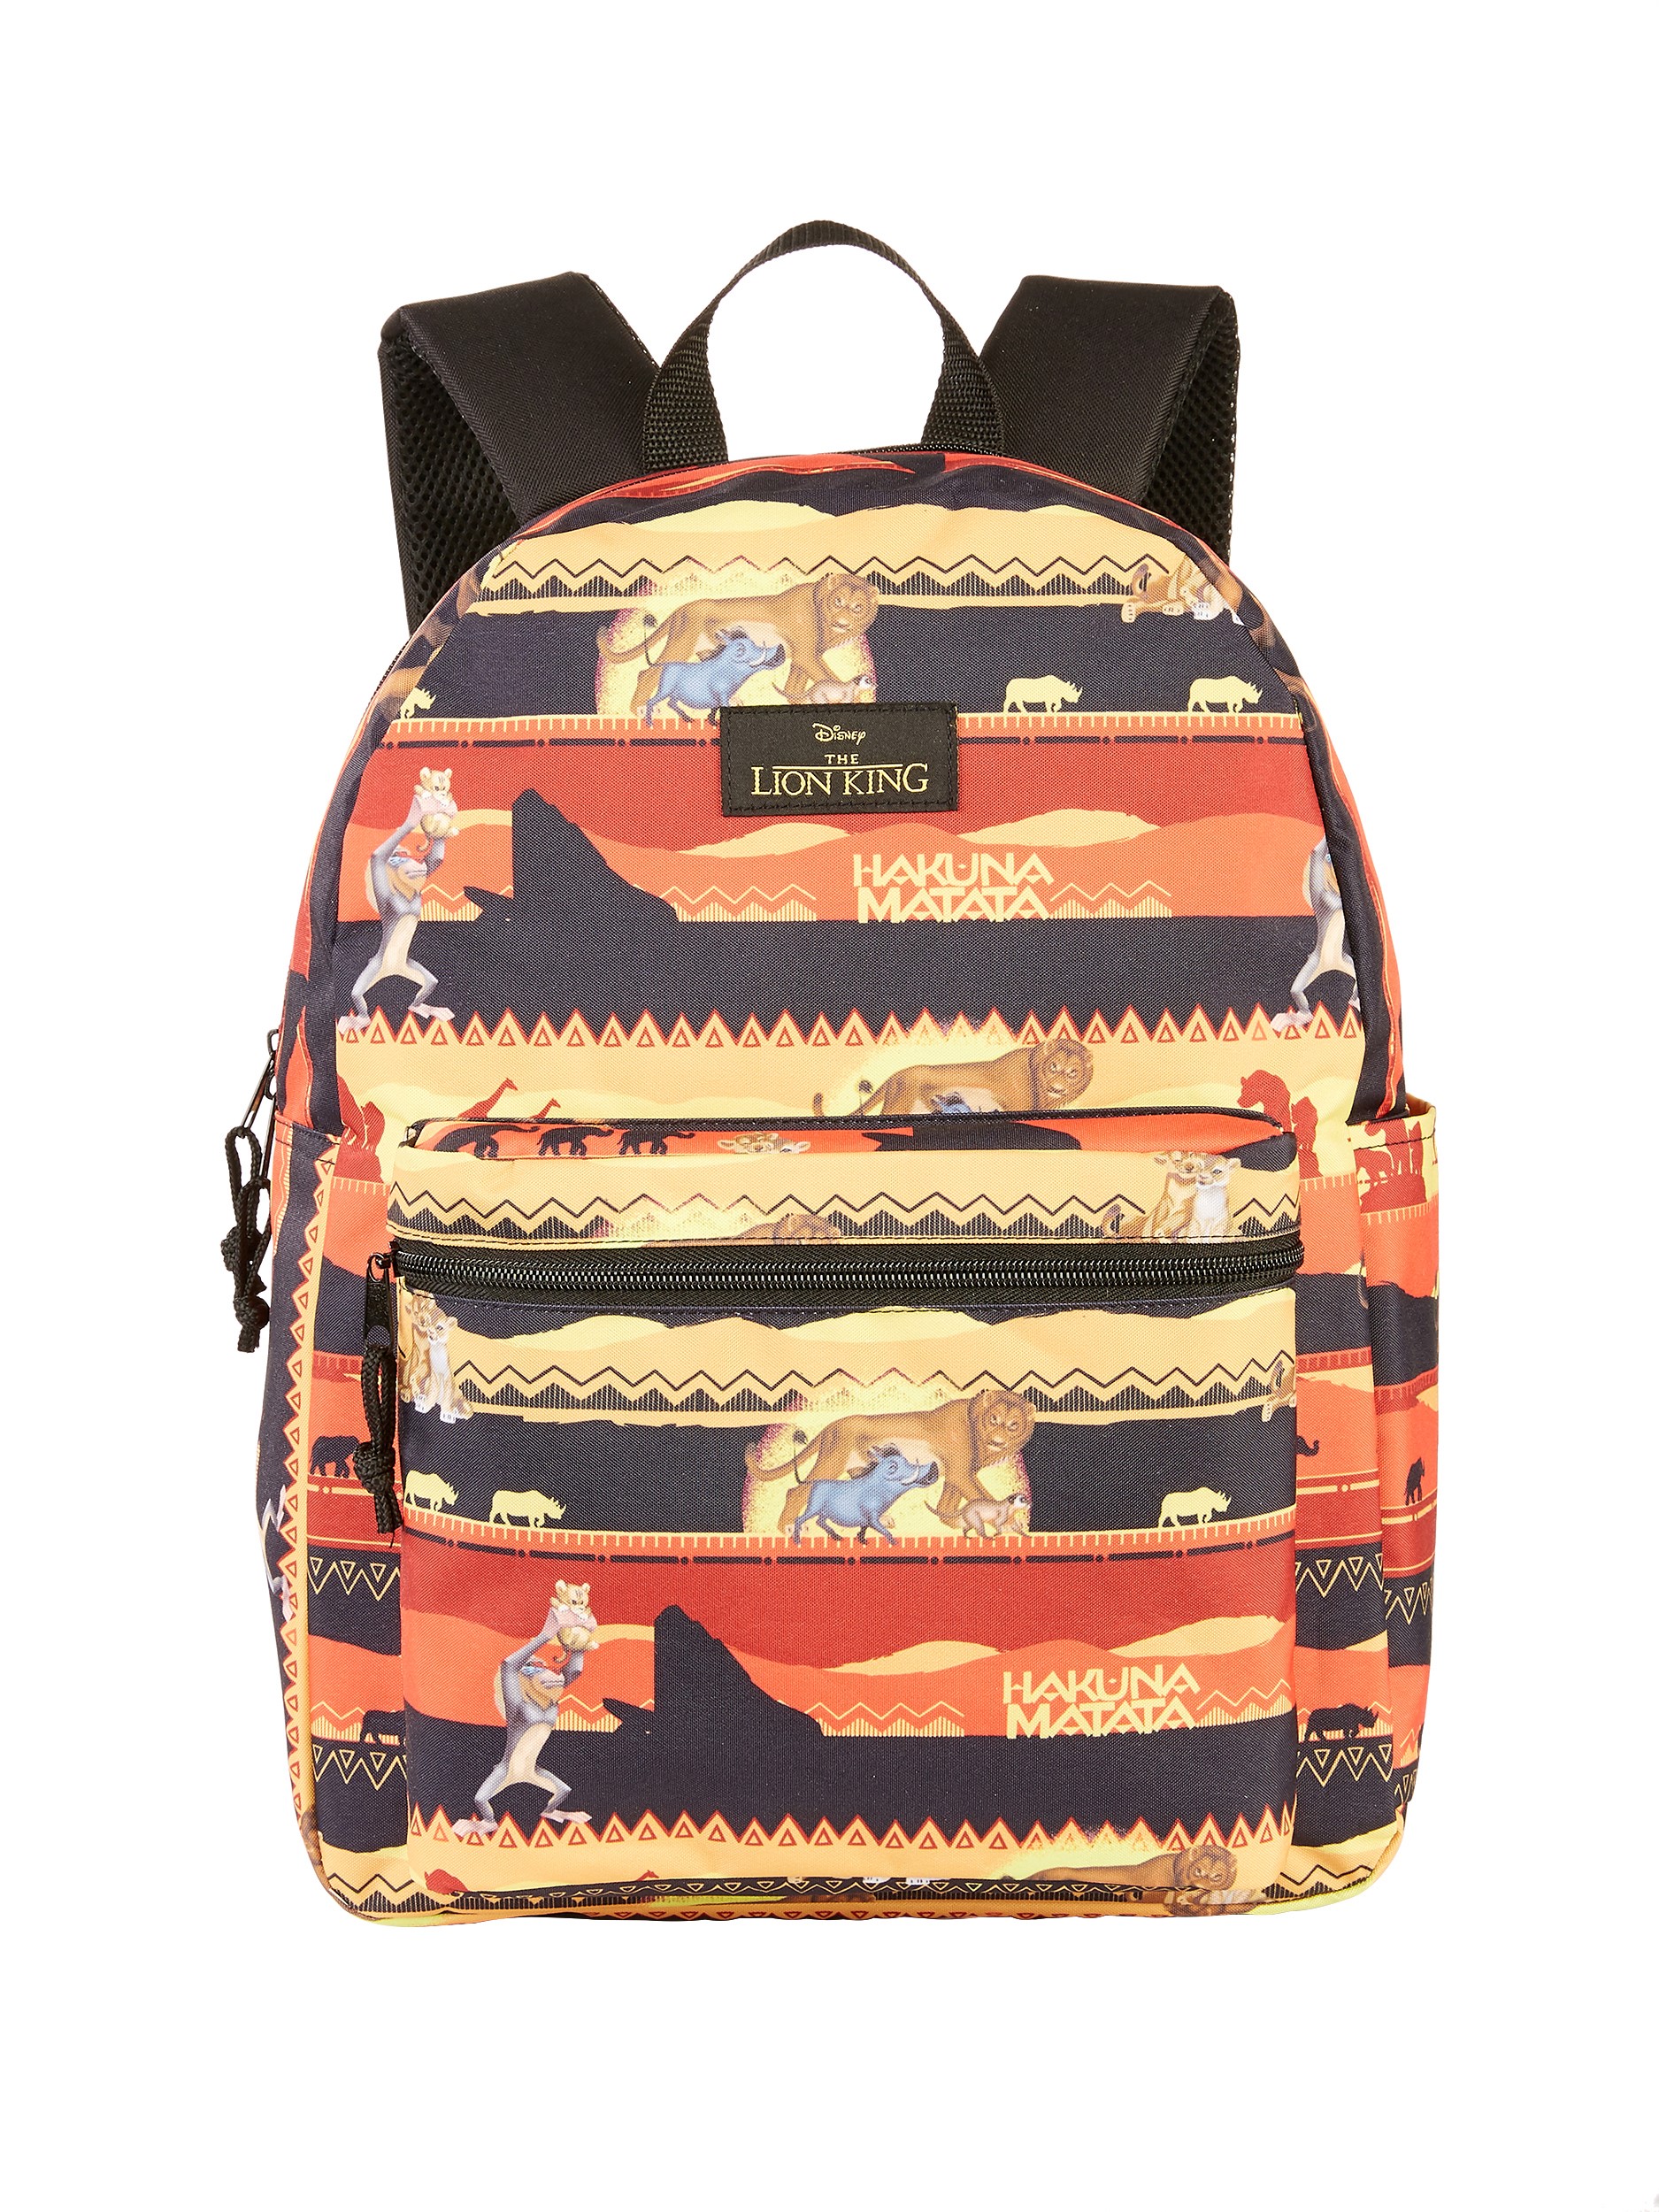 Lion King 16" Sunset Backpack (Walmart.com Exclusive) - image 1 of 4